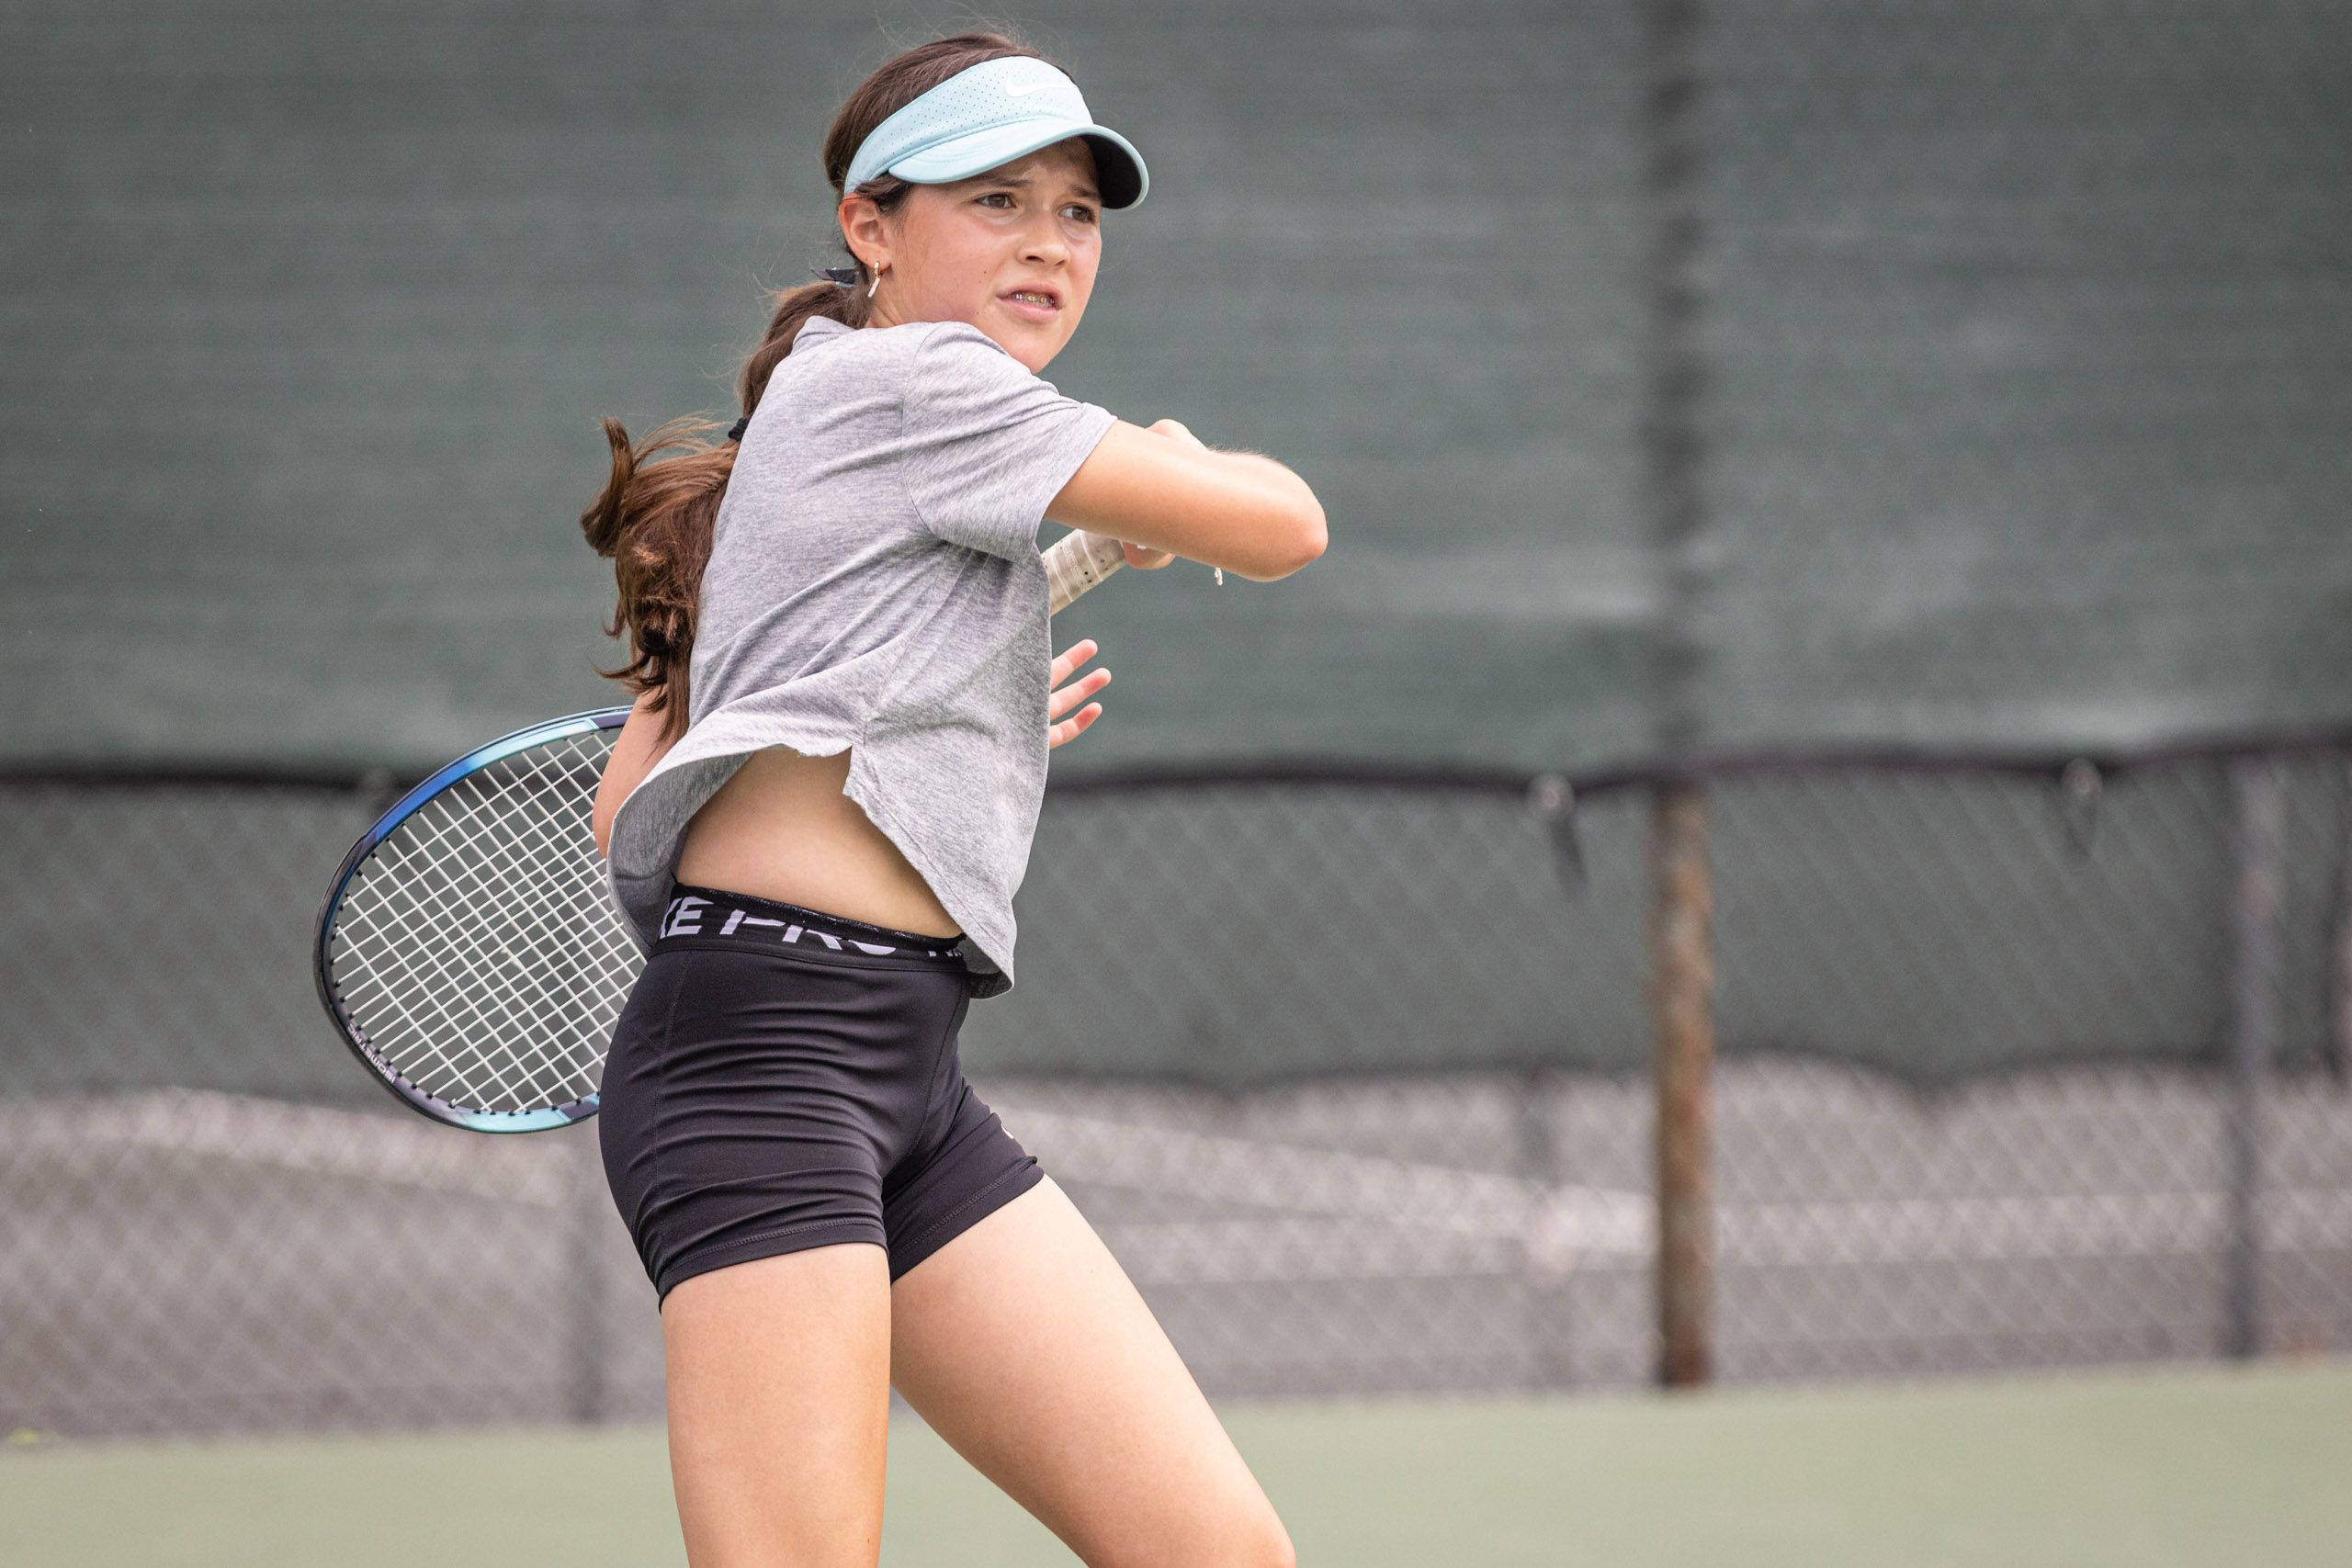 Teenage girl playing tennis